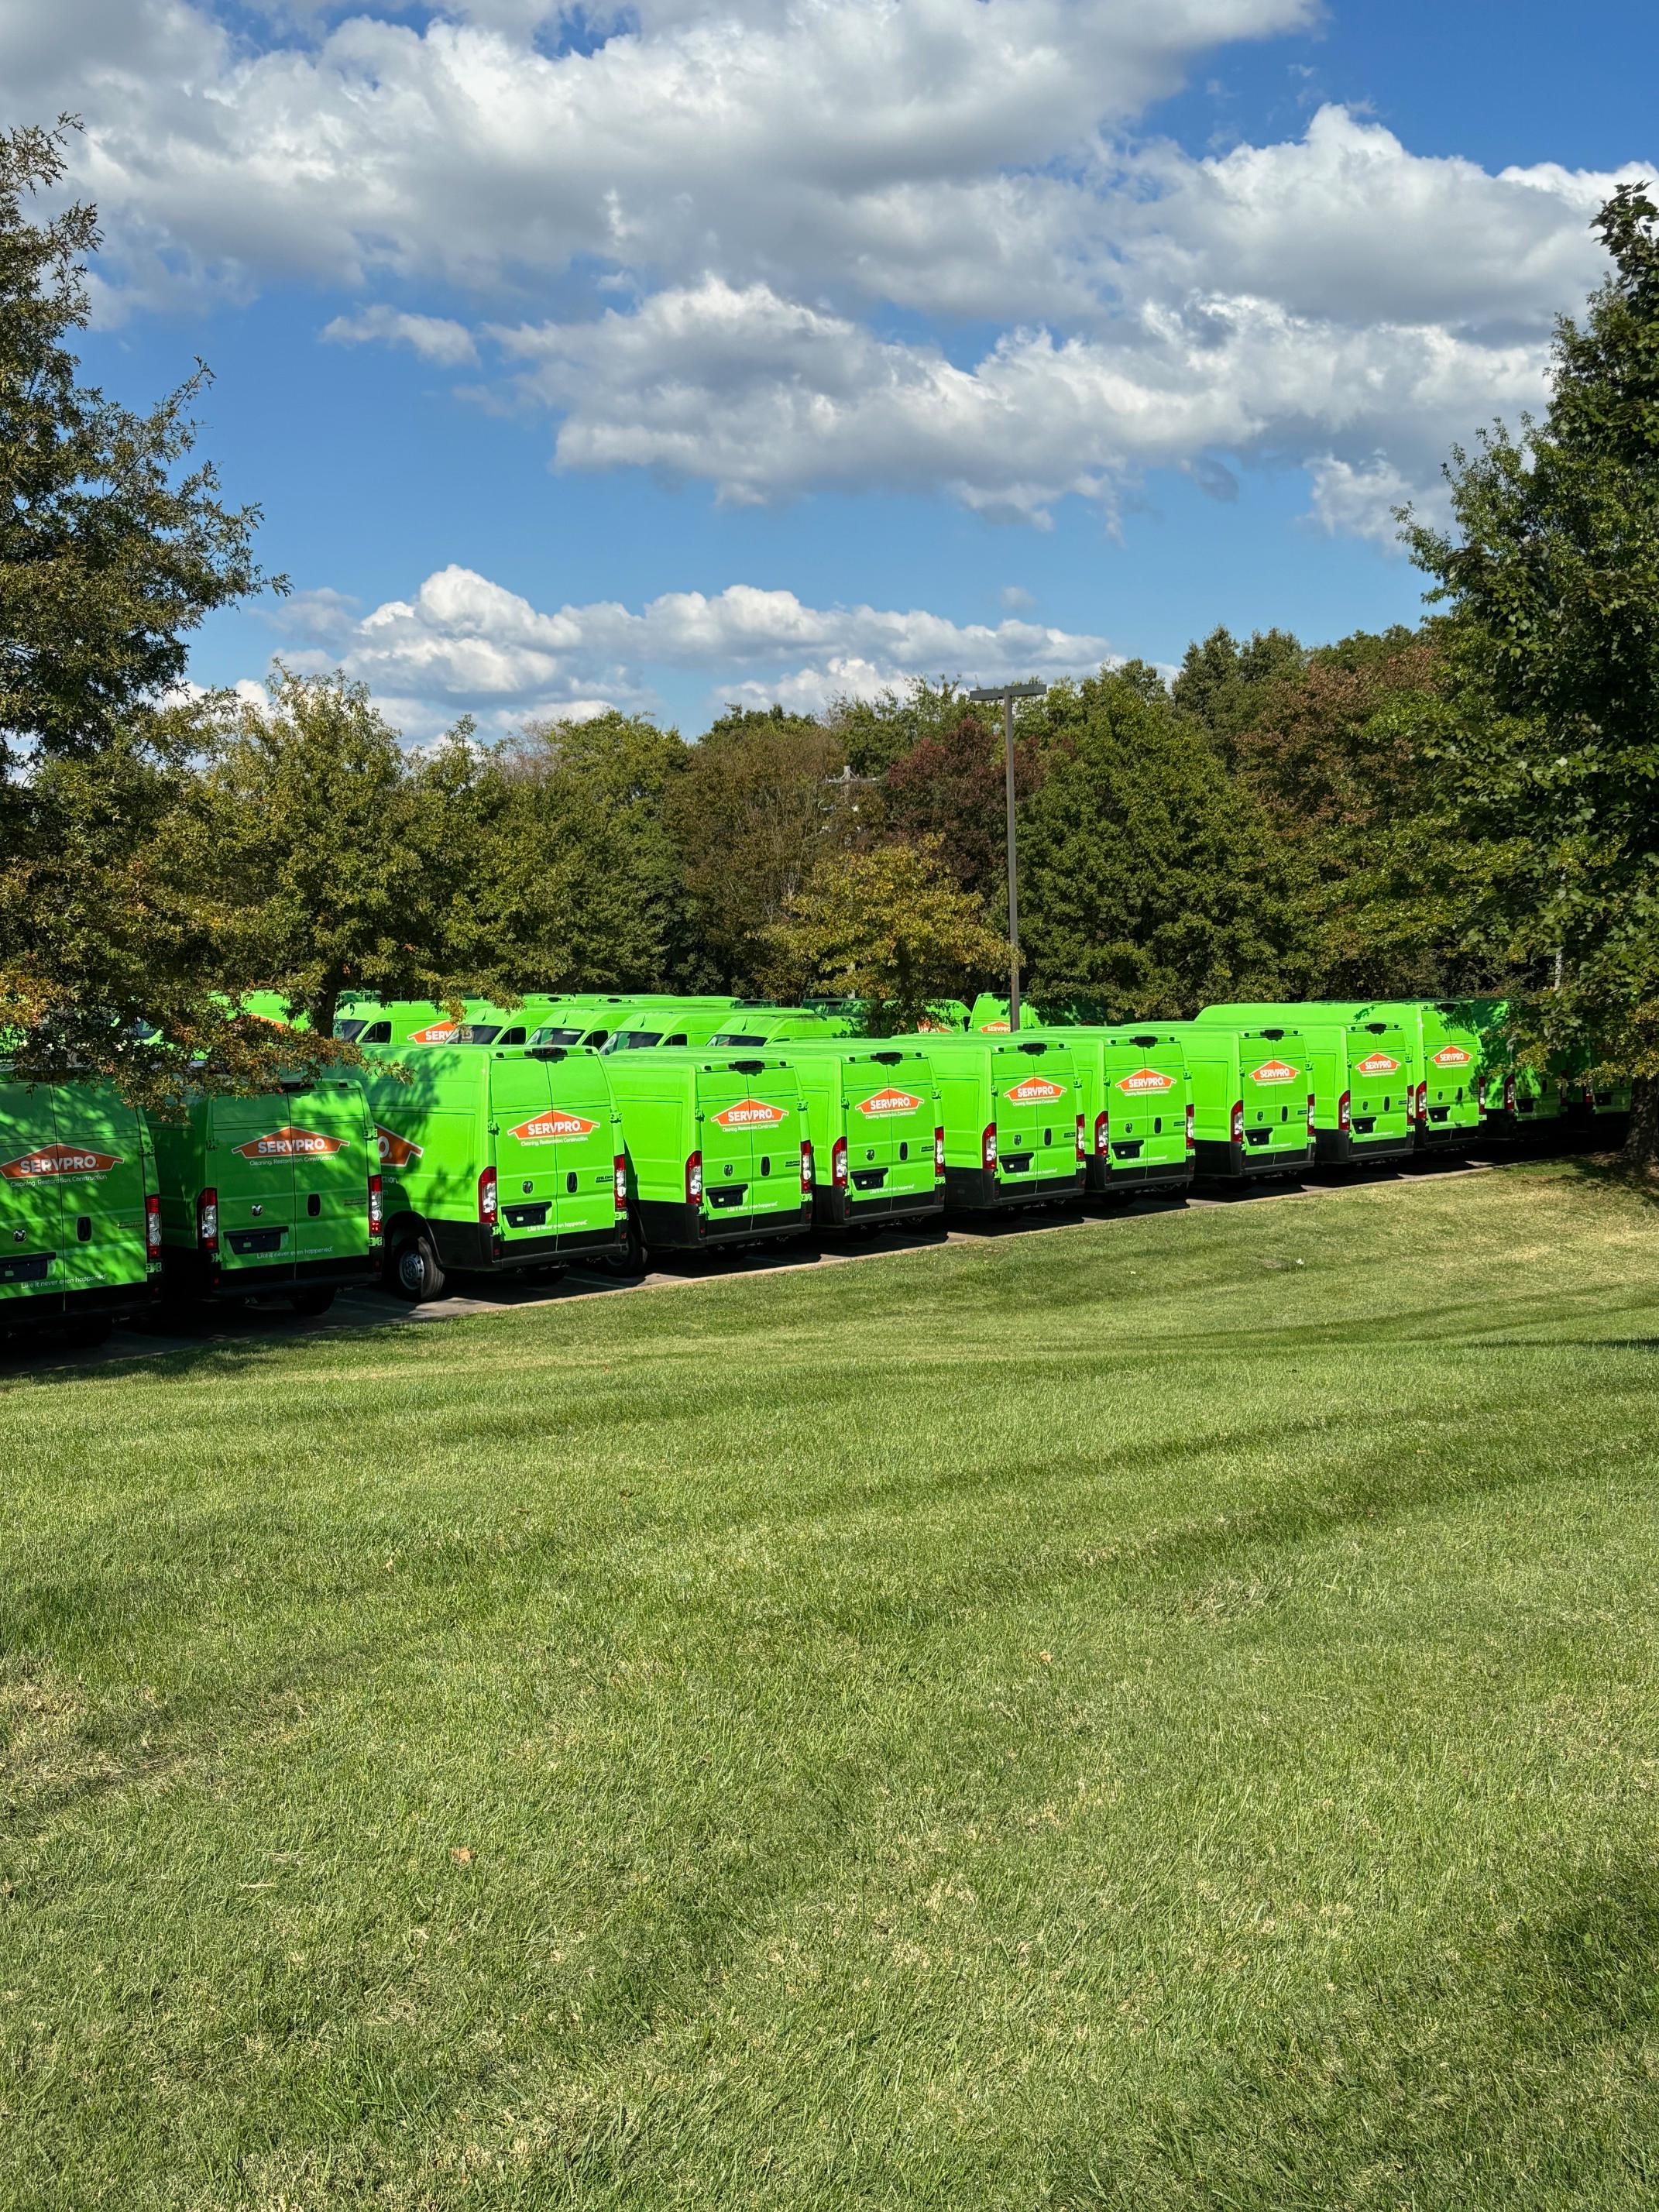 New trucks have arrived